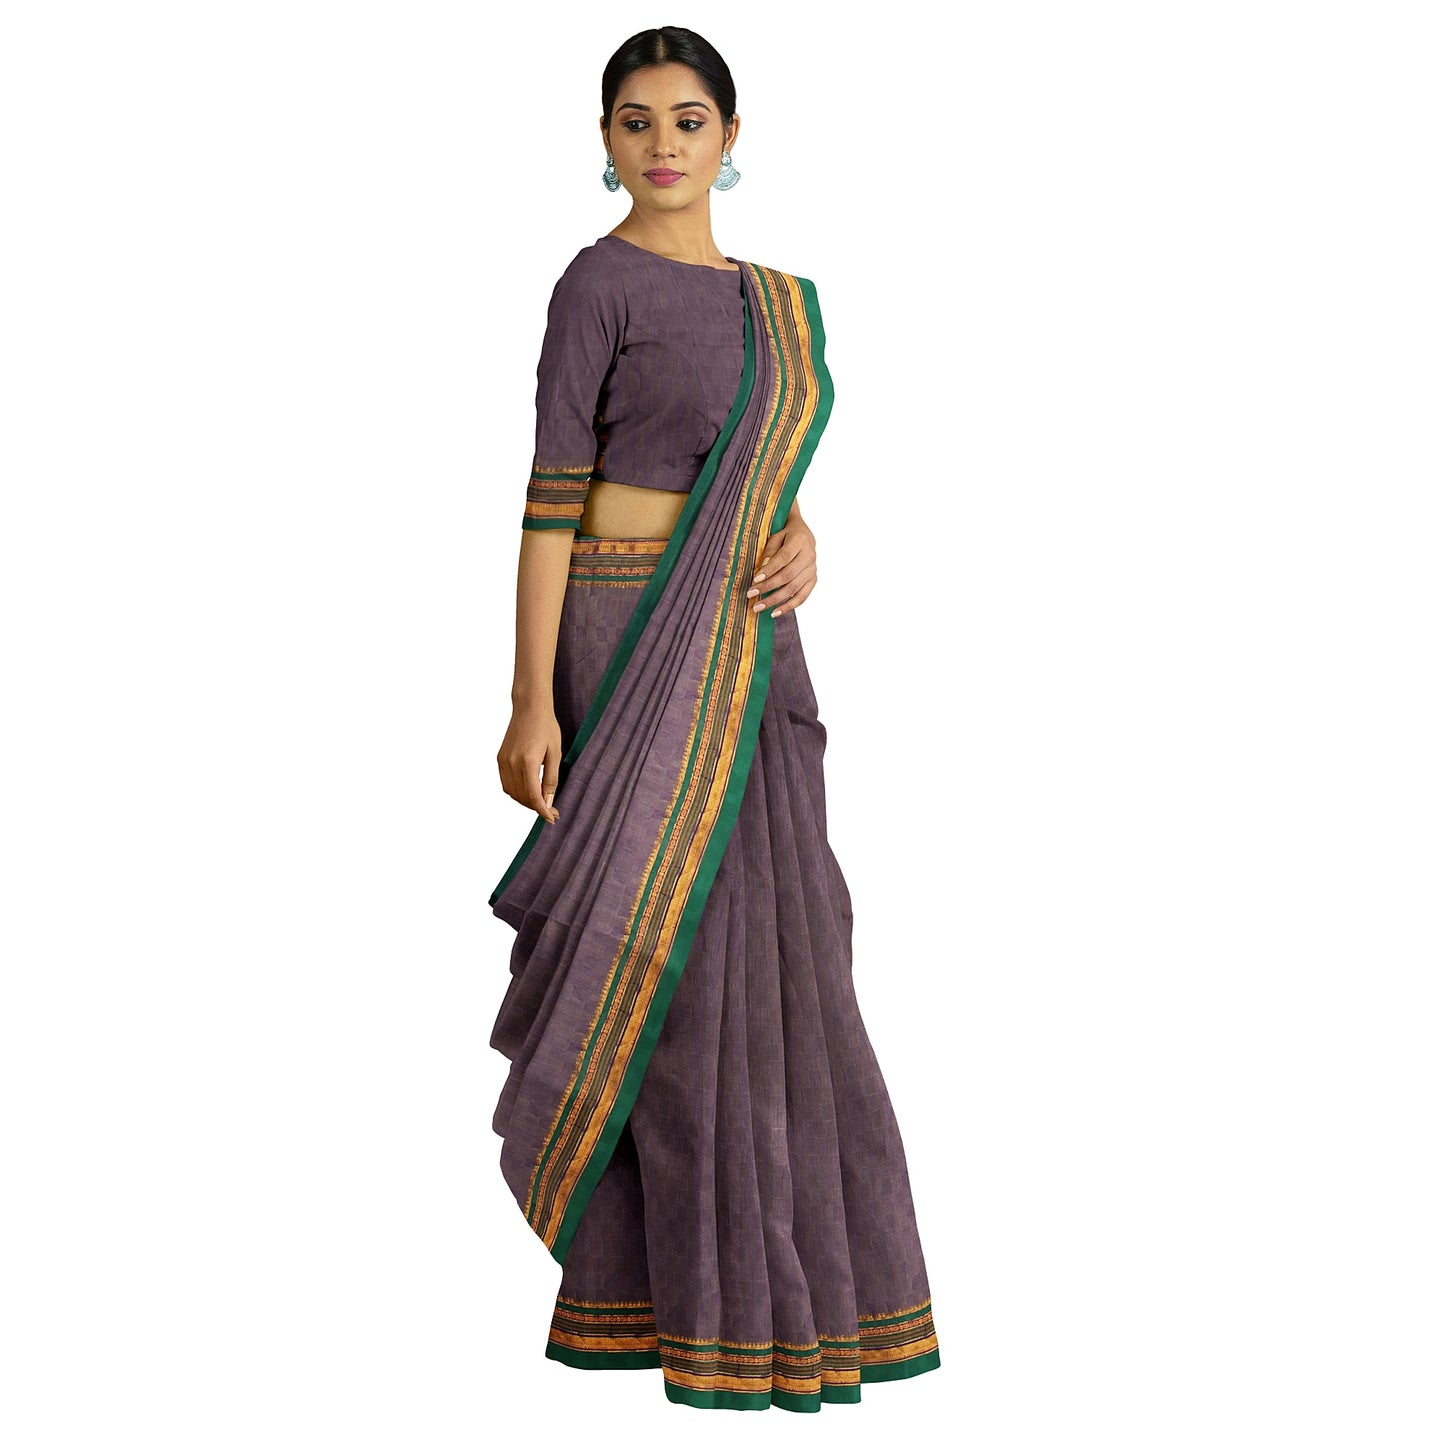 Ambuja Soft Mercerized Cotton saree - Lavender with Green border